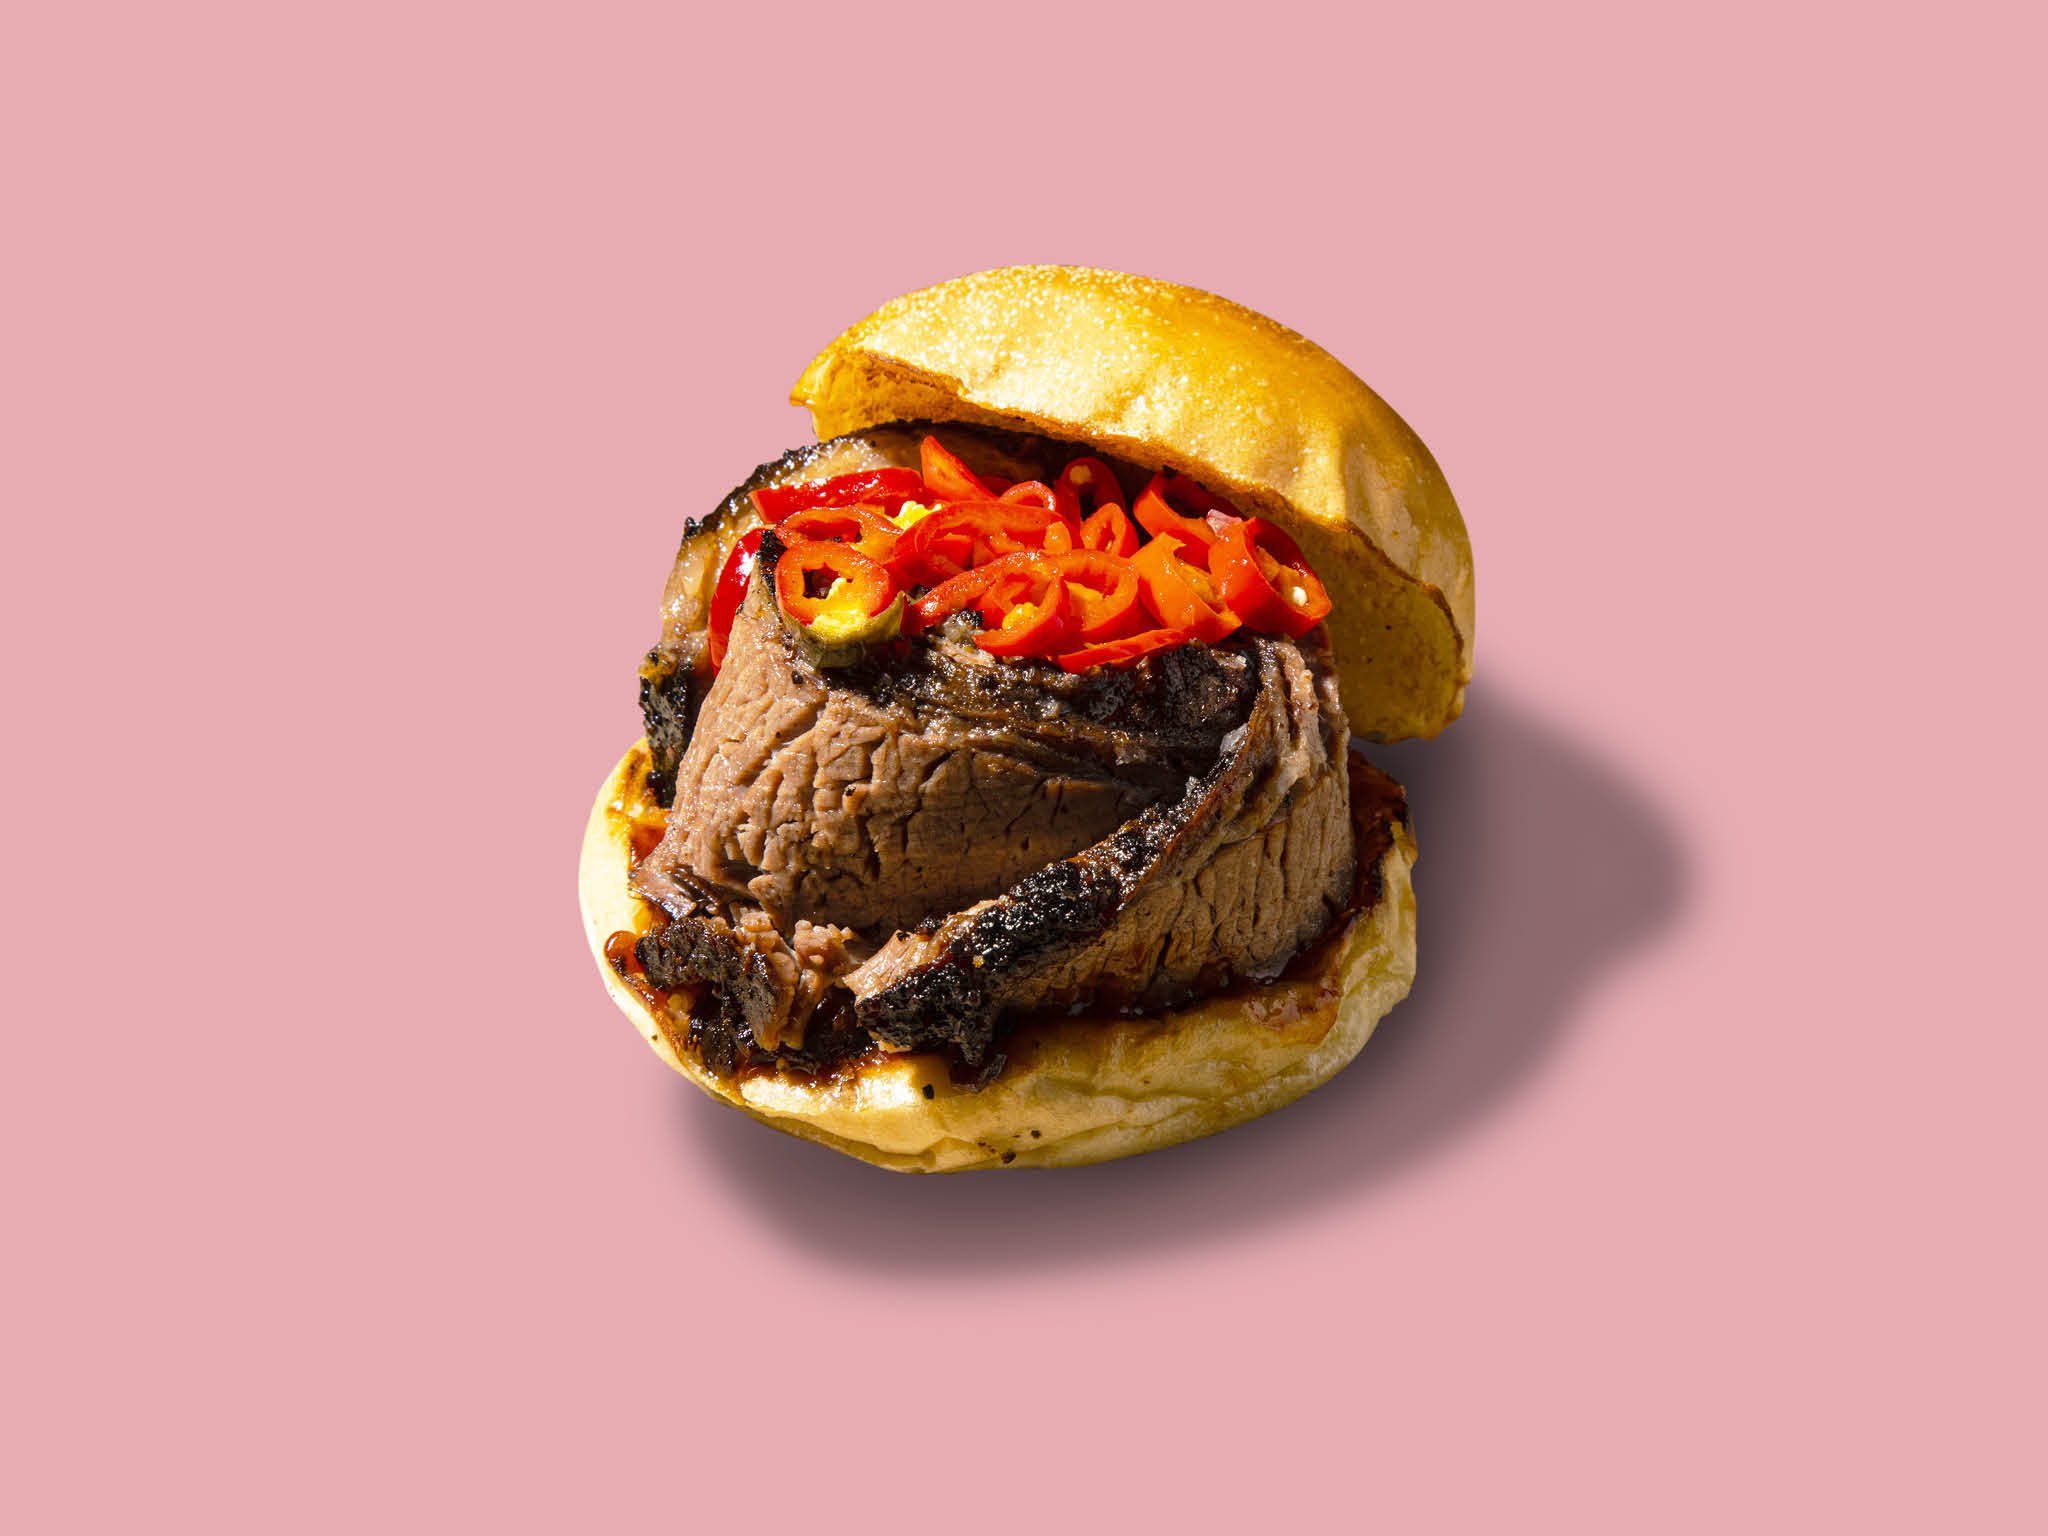 Smokestak’s ‘perfectly balanced’ brisket bun